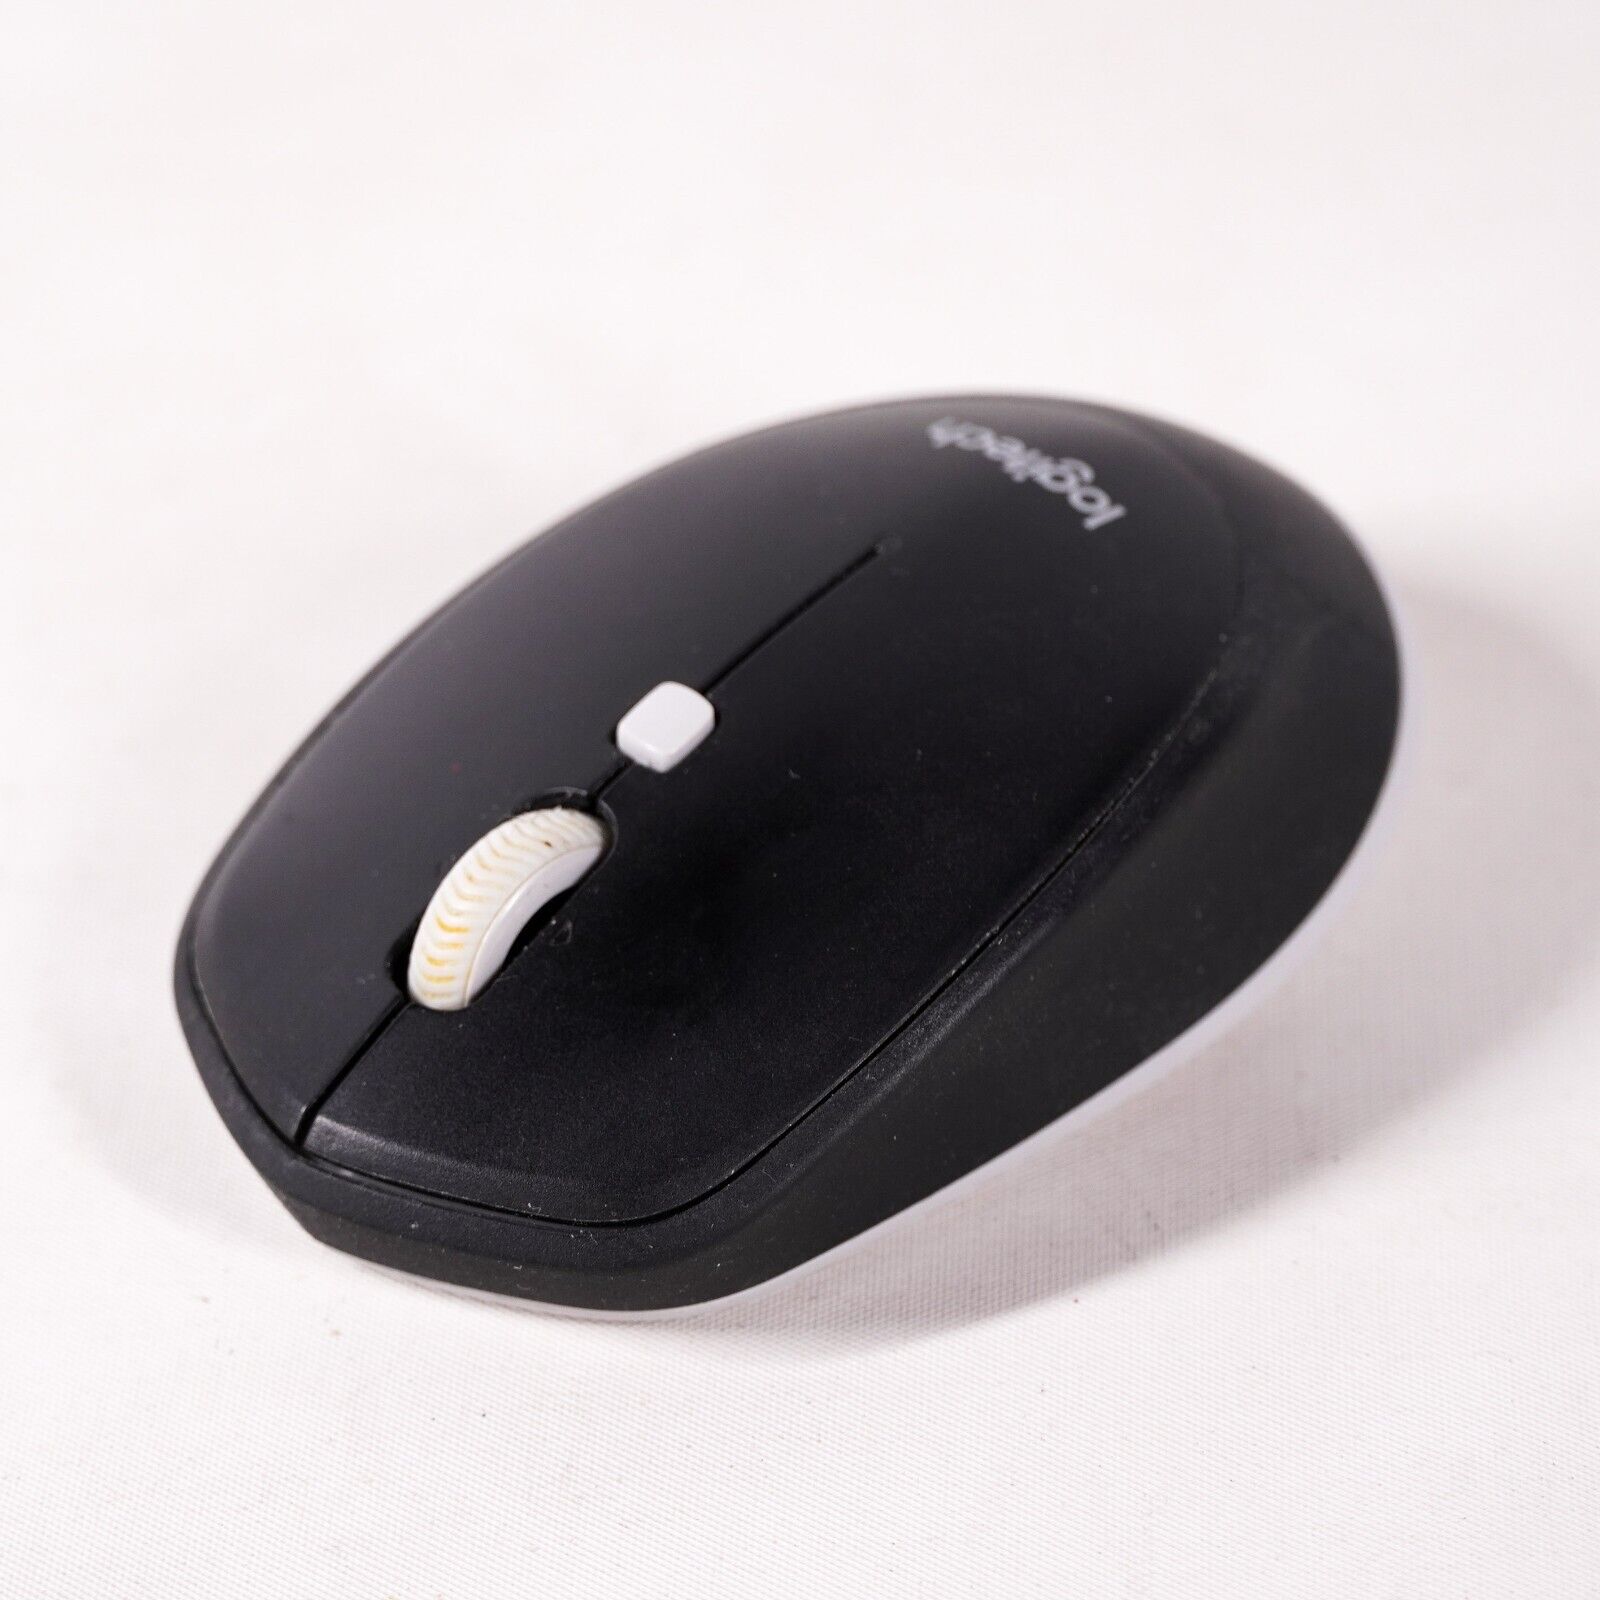 Logitech M535 Compact Wireless Bluetooth Laser Mouse